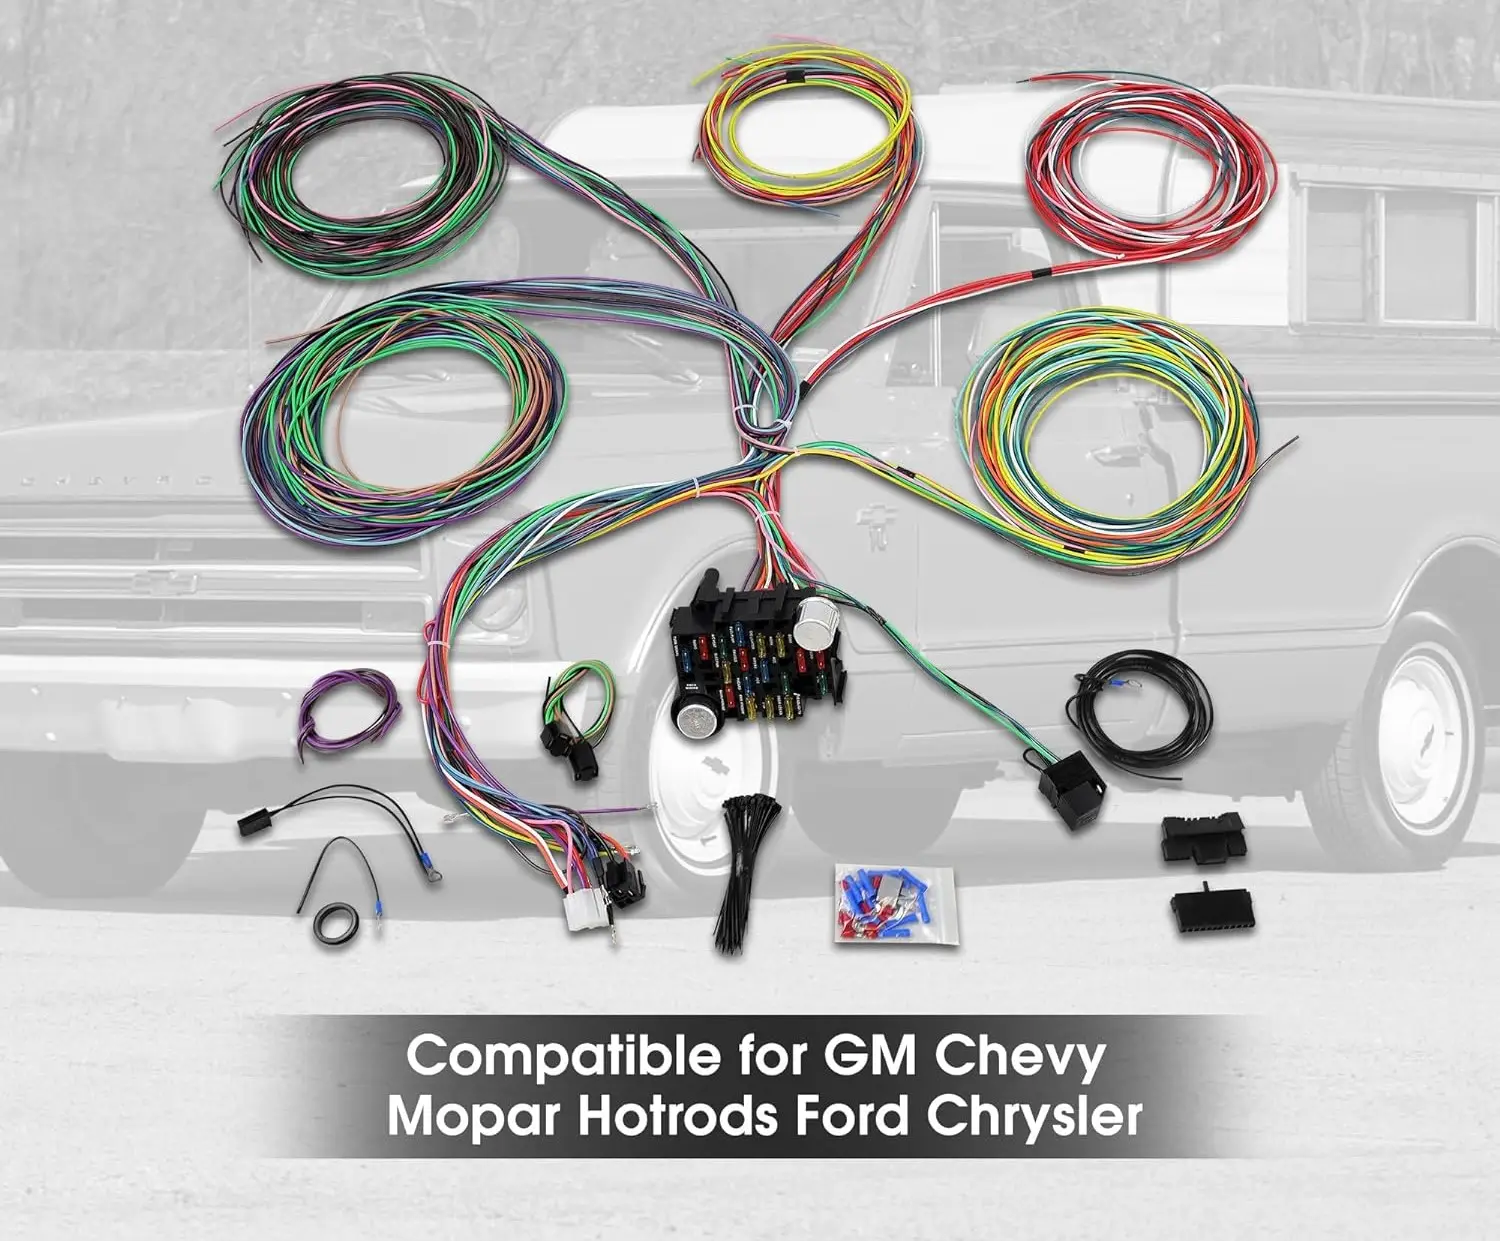 Evrensel 21 devre kablo demeti kiti ekstra uzun tel standart renk 17 sigortalar GM Chevy Mopar Hotrods Ford Chrysler için